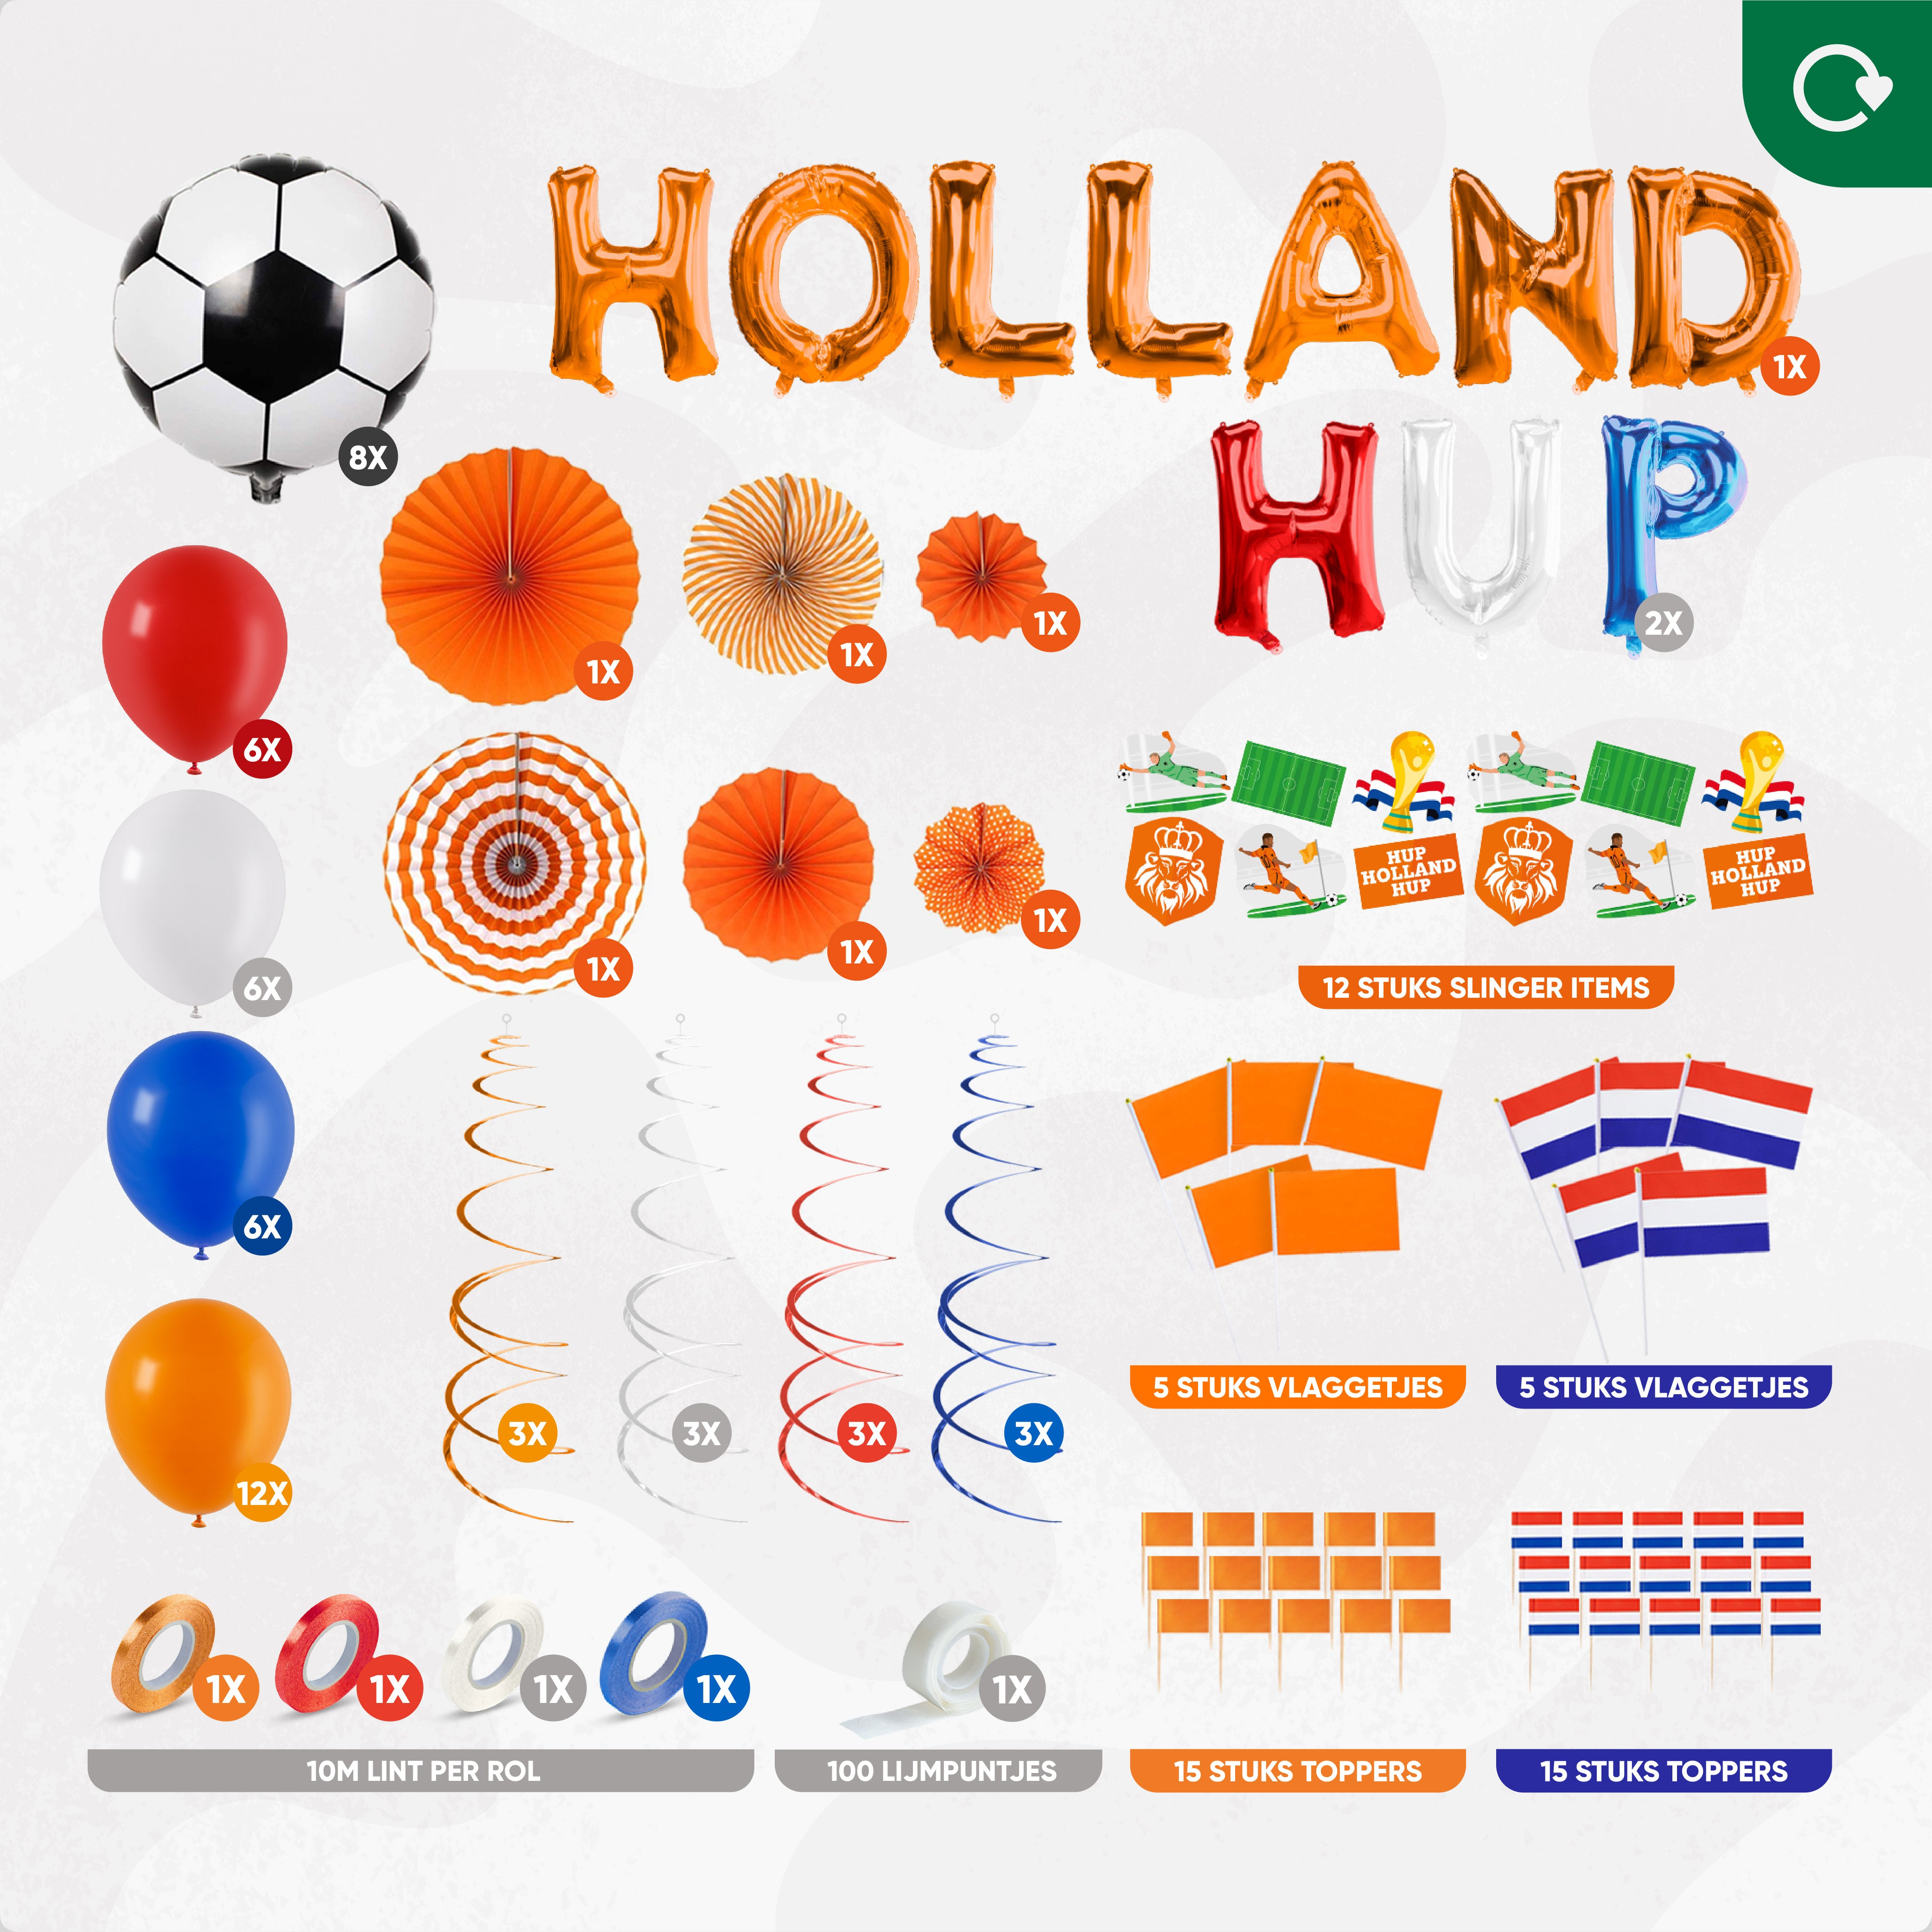 EK & WK Voetbal Nederland Feestpakket Oranje, Rood, Wit & Blauw